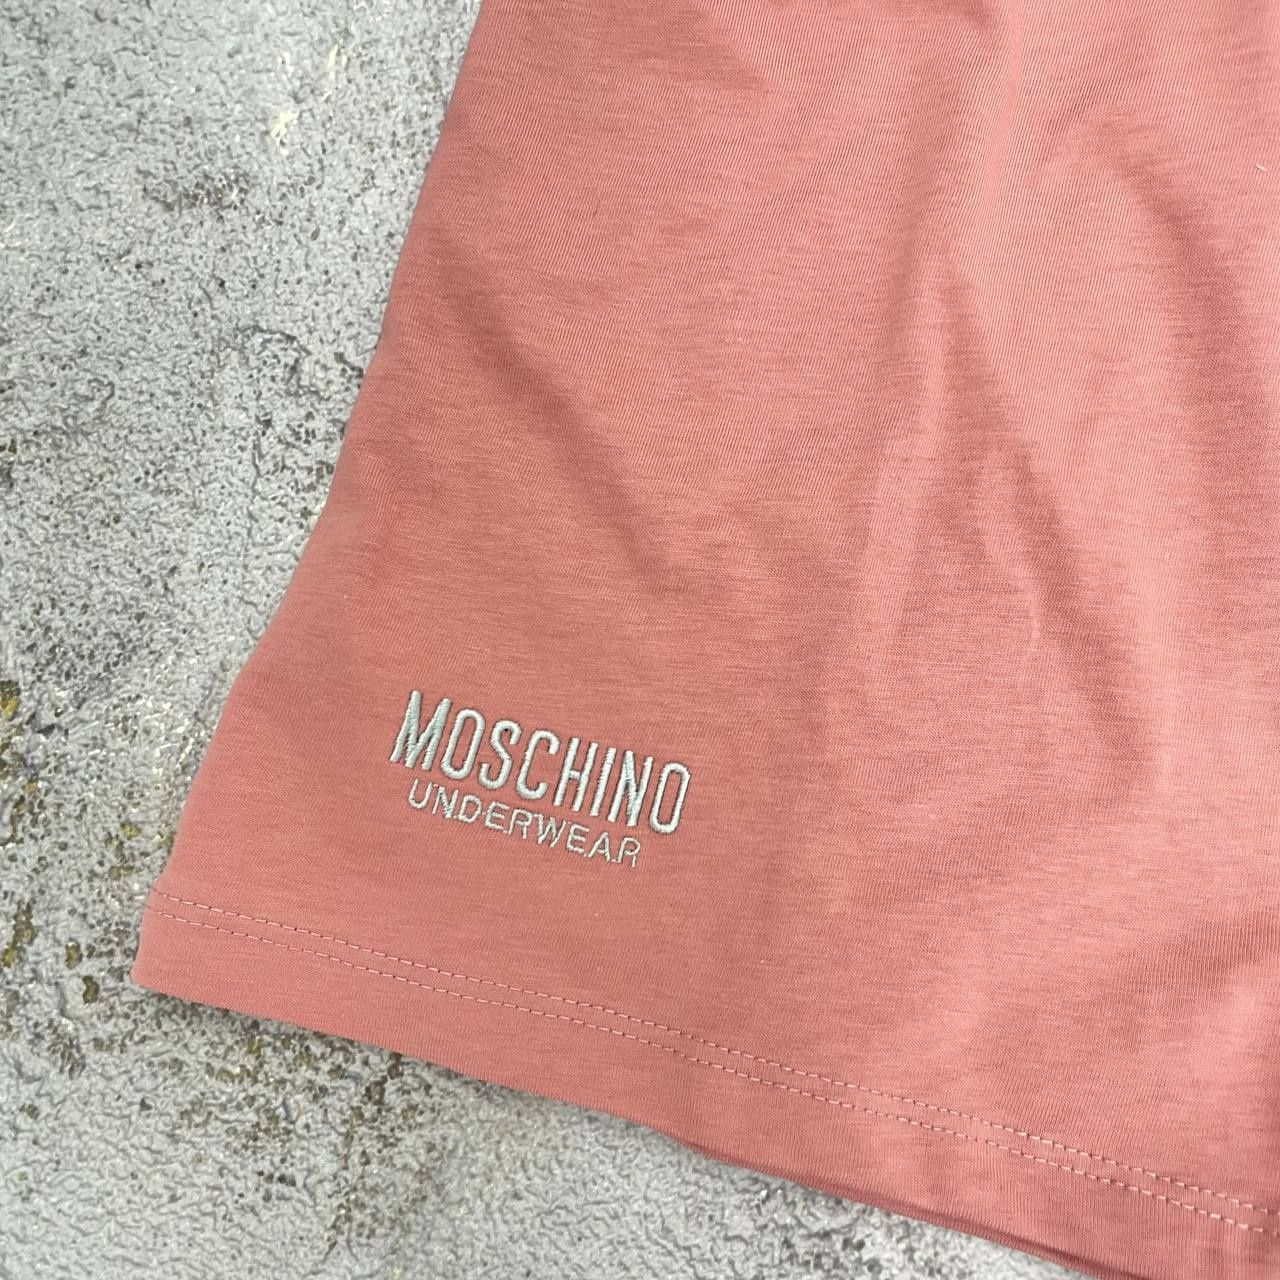 NEW COLLECTION футболка от Moschino екскюзивная новинка - весна, лето